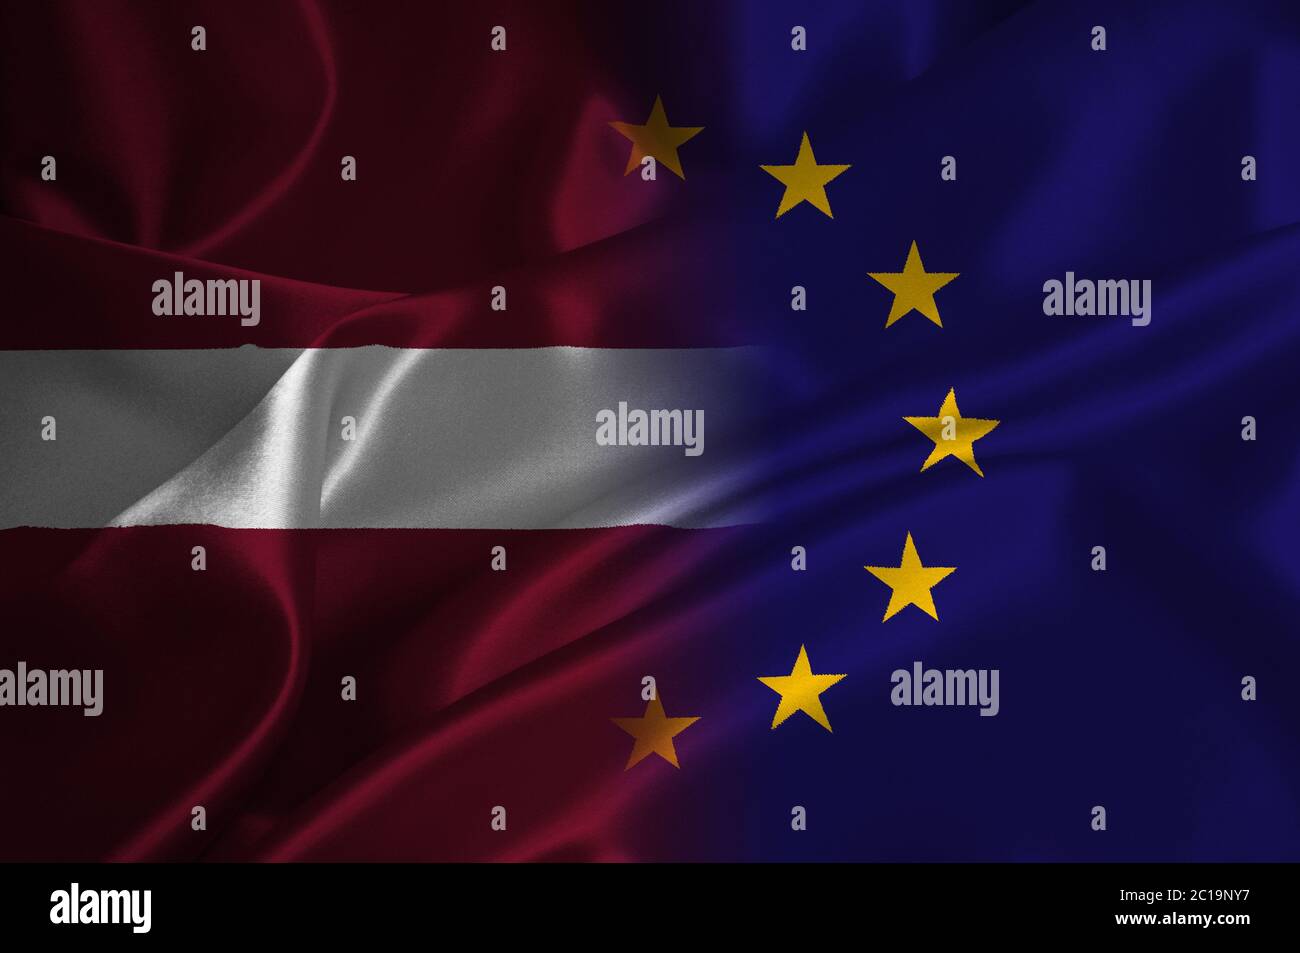 EU flag and Latvia flag on satin texture Stock Photo